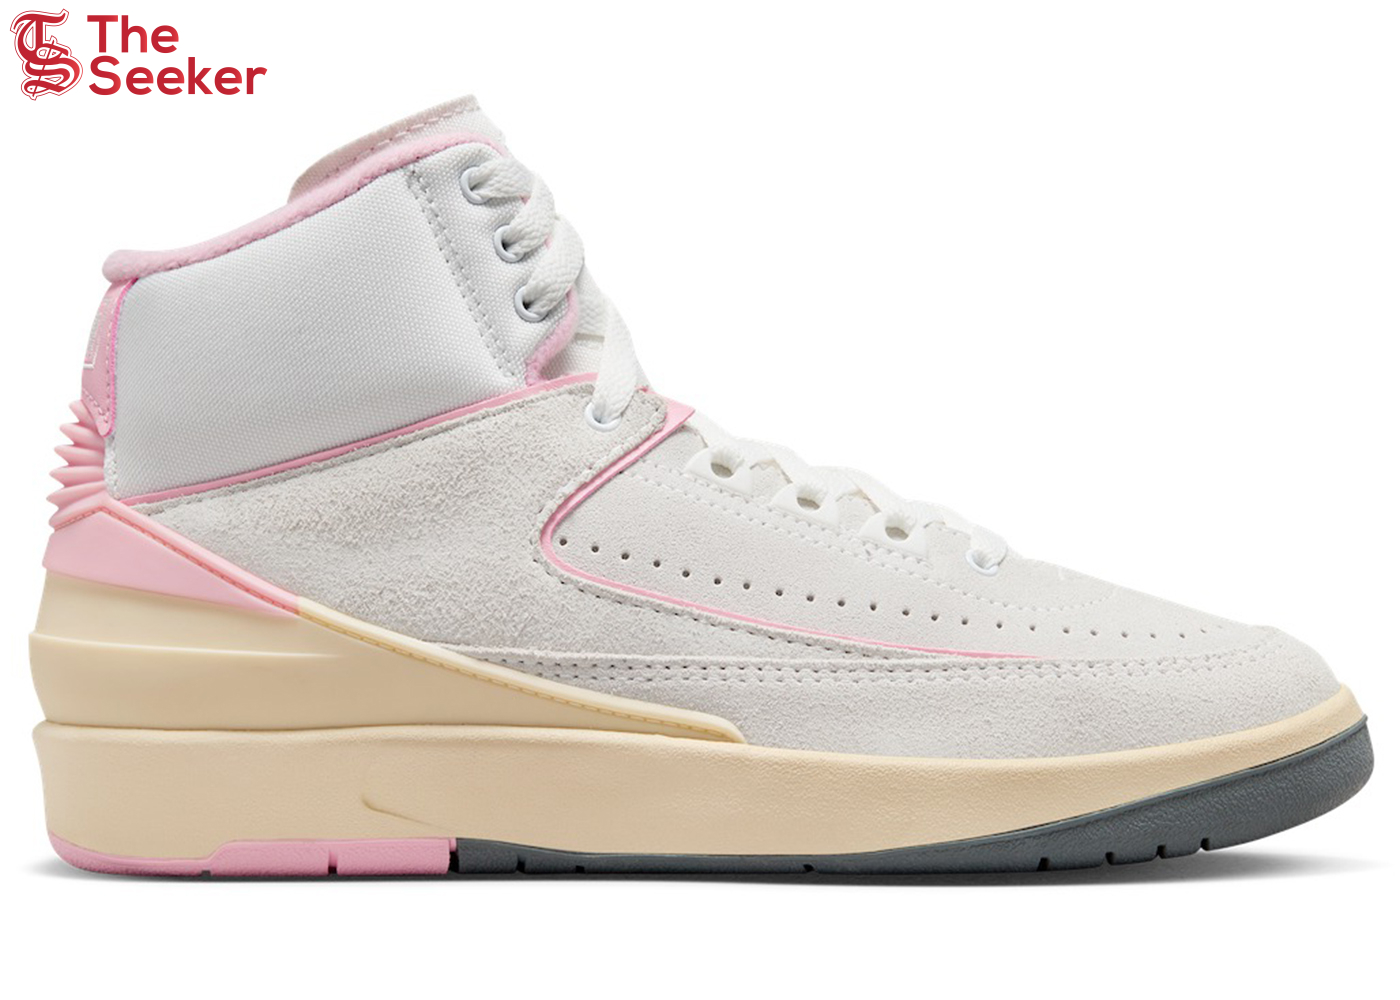 Jordan 2 Retro Soft Pink (Women's